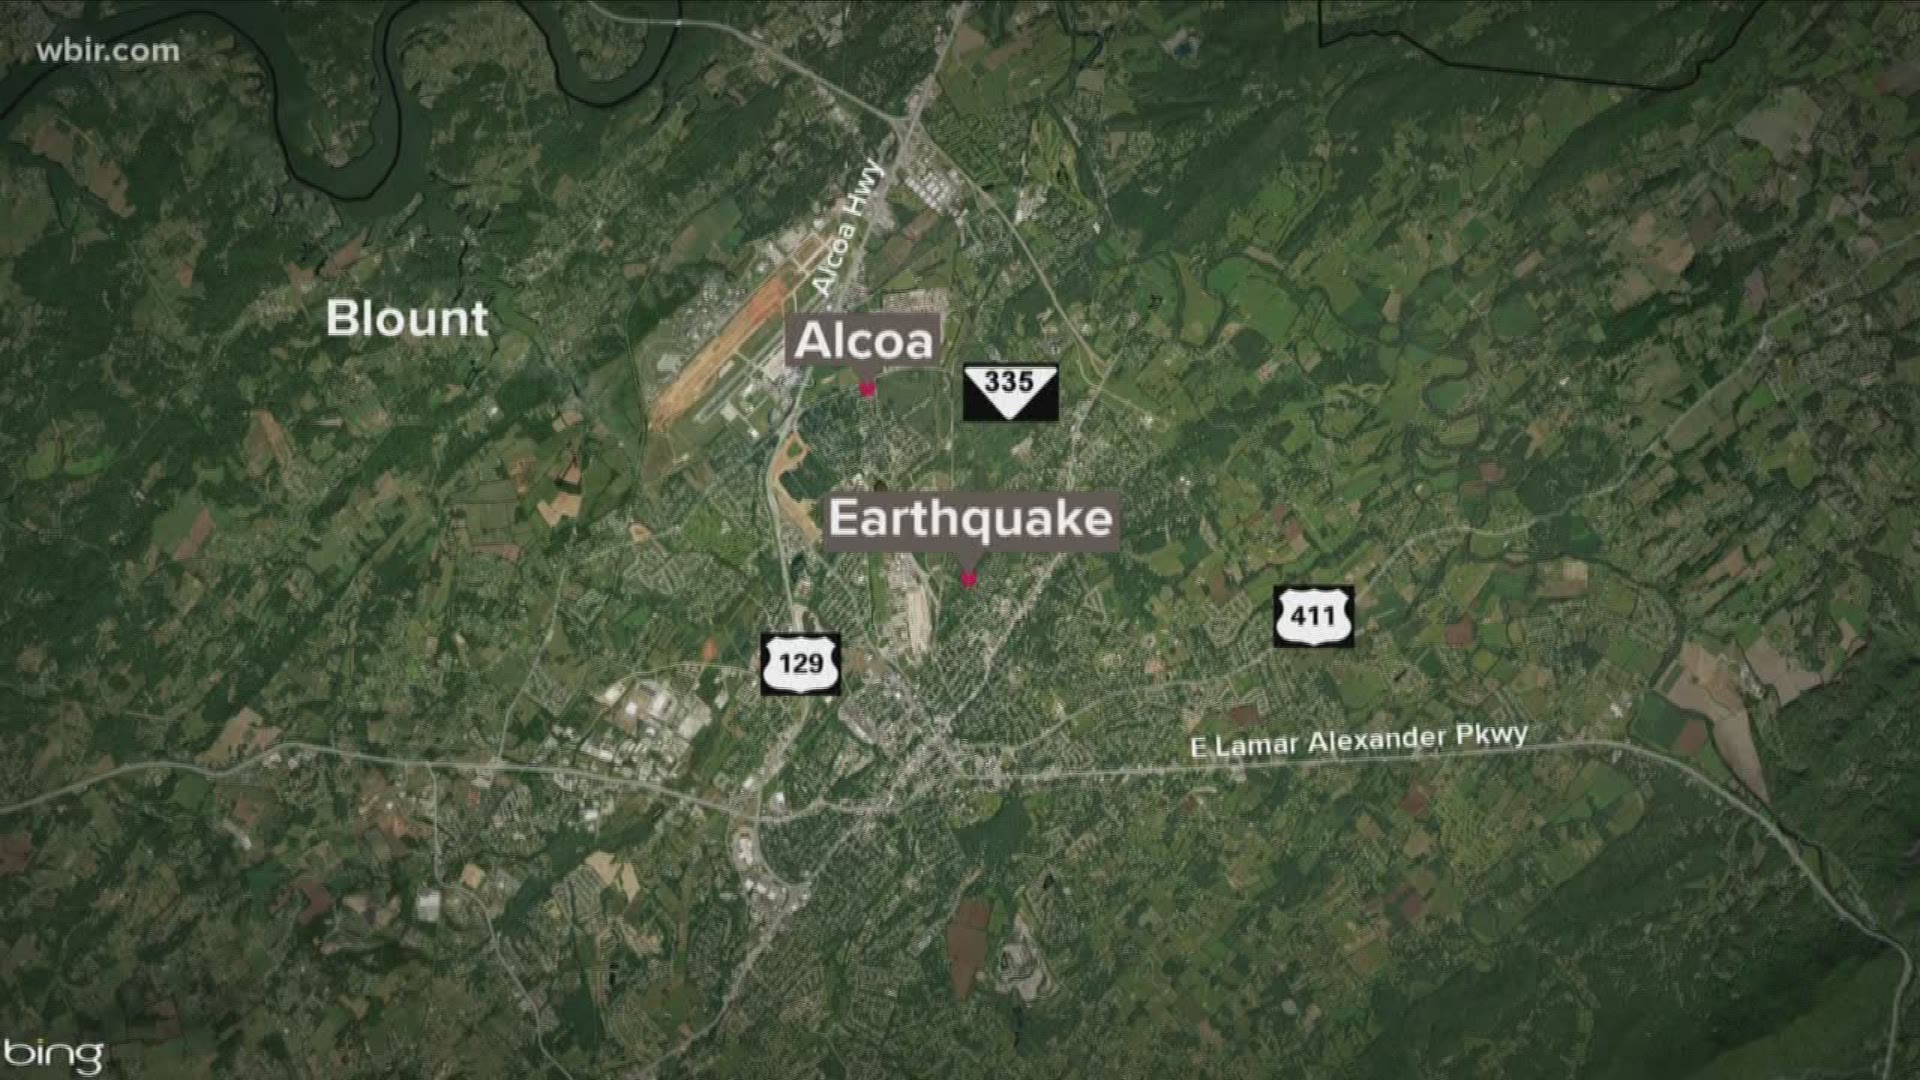 The USGS said a 3.0 magnitude earthquake hit the Alcoa area around 4 a.m. Monday.